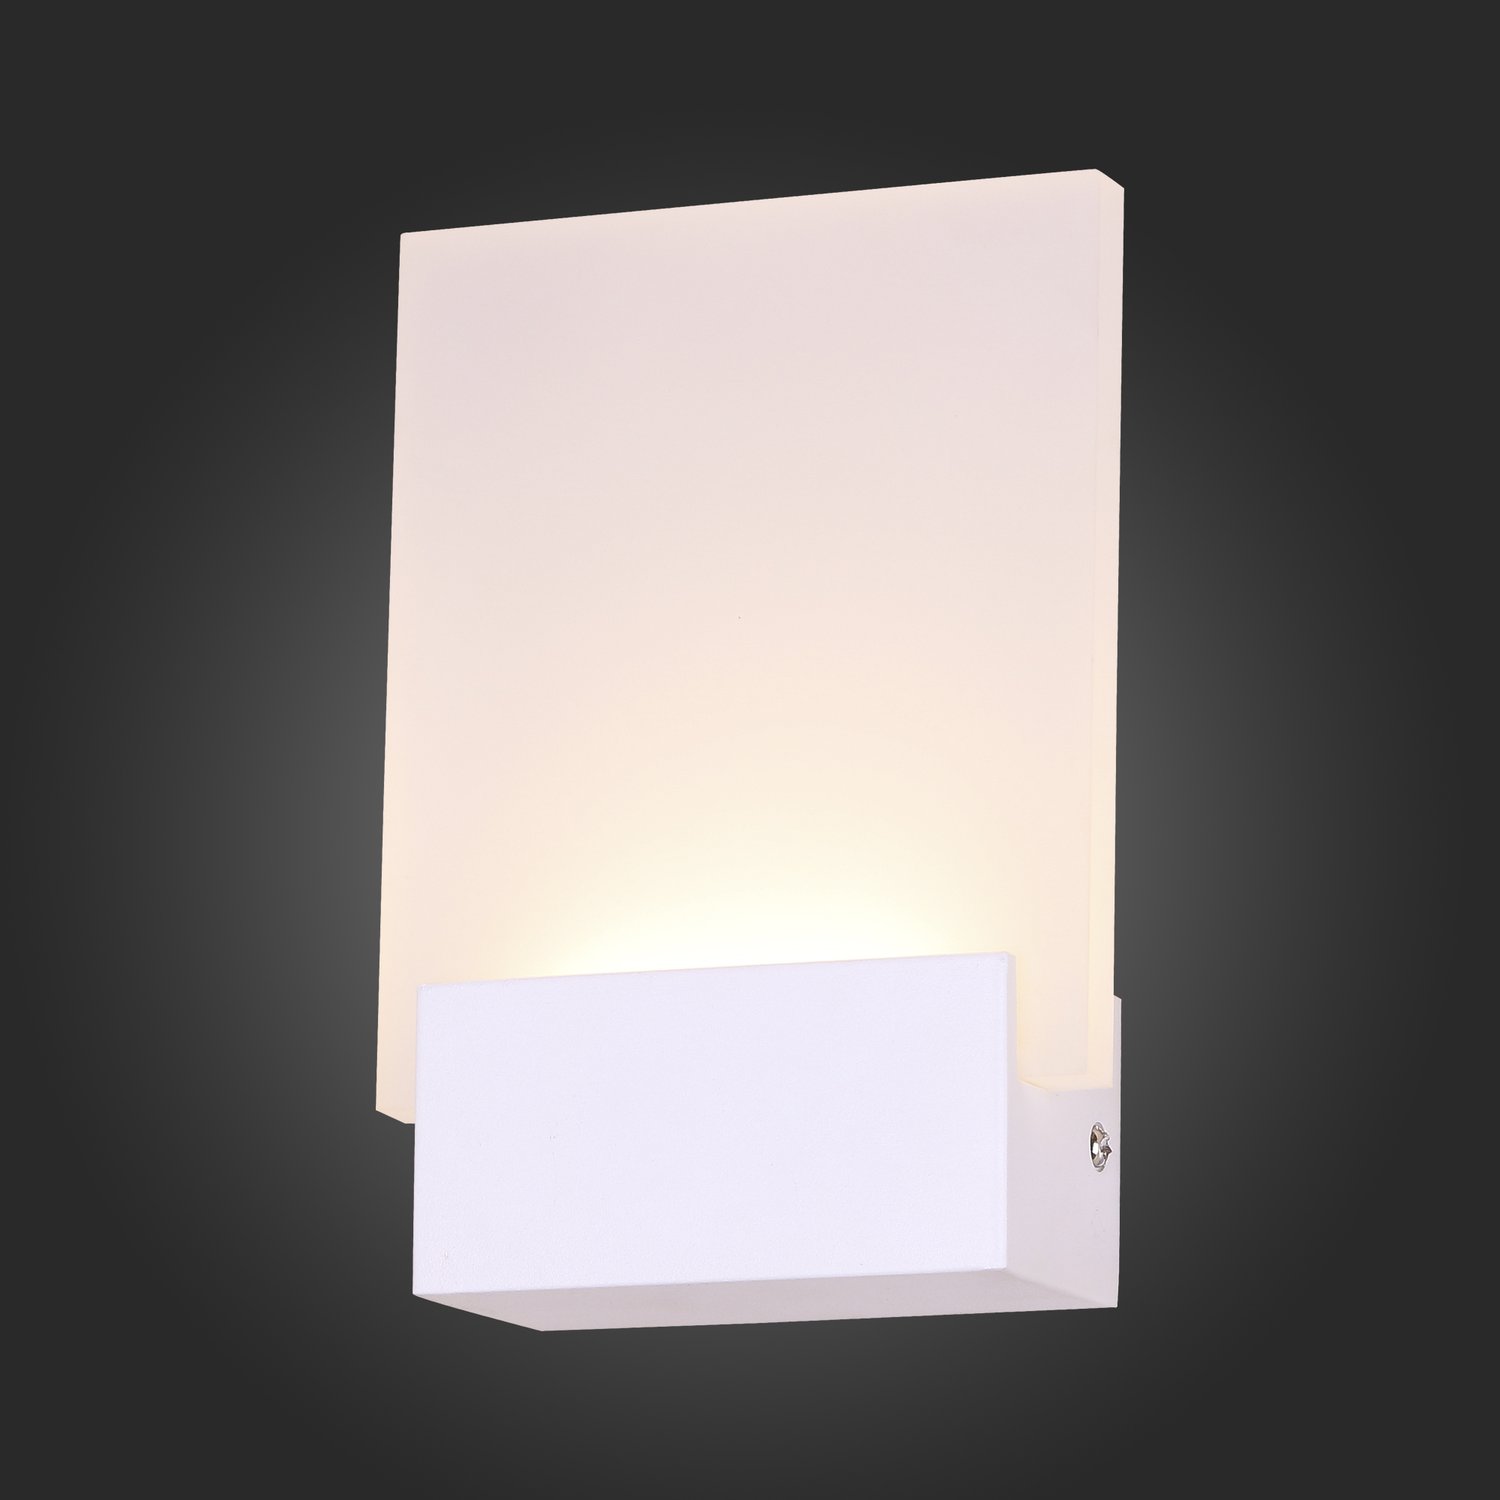 SL580.111.01 Светильник настенный ST-Luce Белый/Белый LED 1*6W 4000K LUOGO